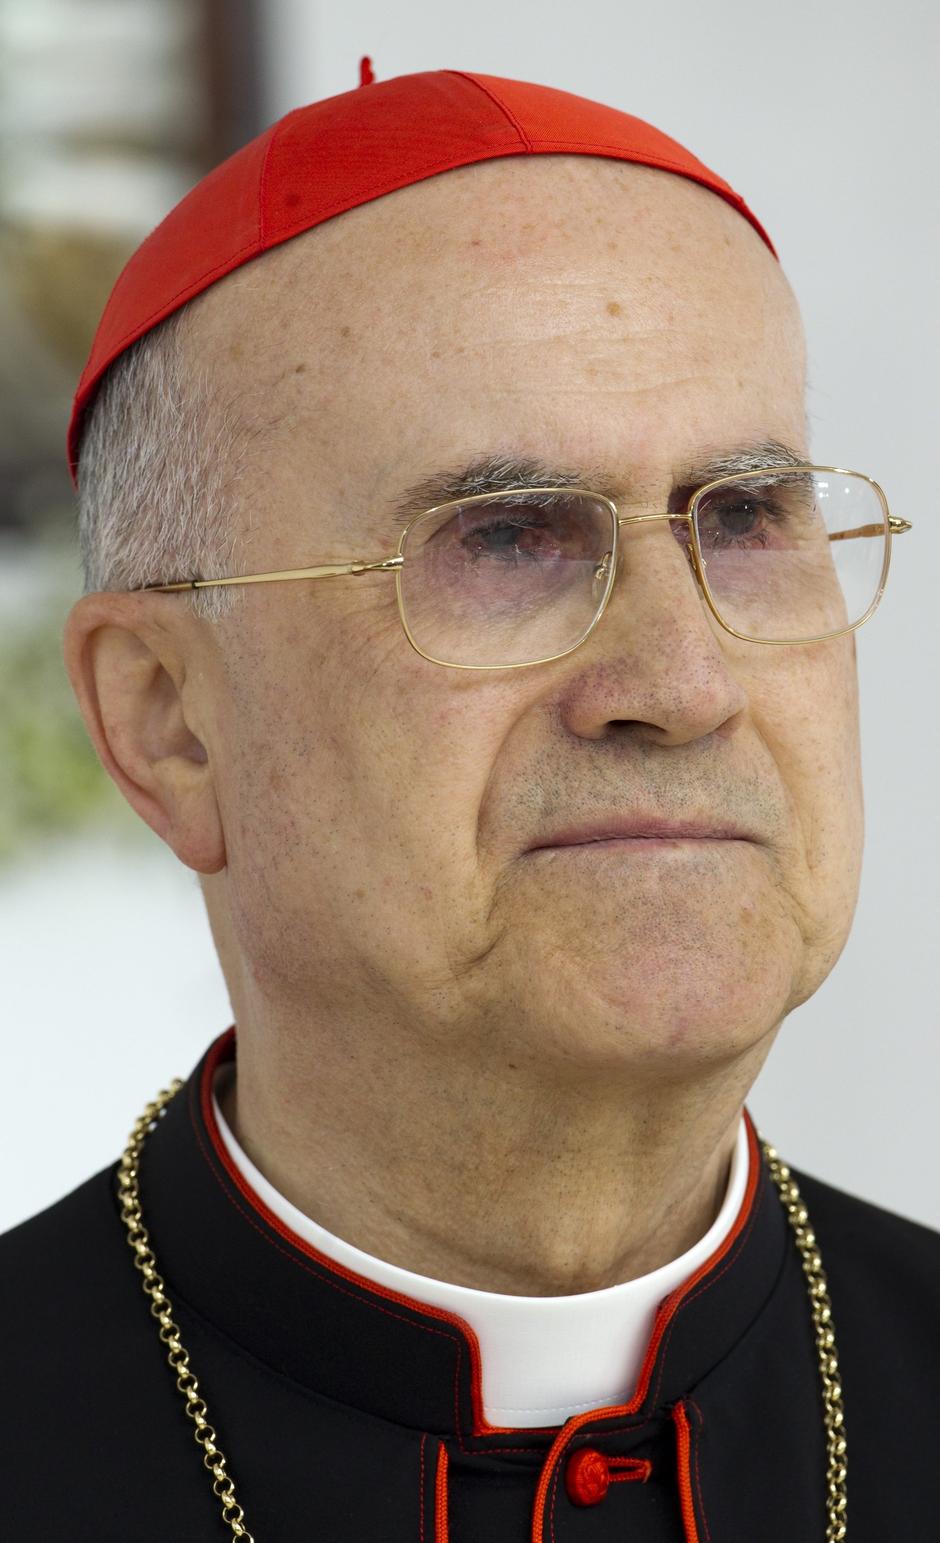 Umirovljeni kardinal Tarcisio Bertone | Author: Michael Kappeler/DPA/PIXSELL